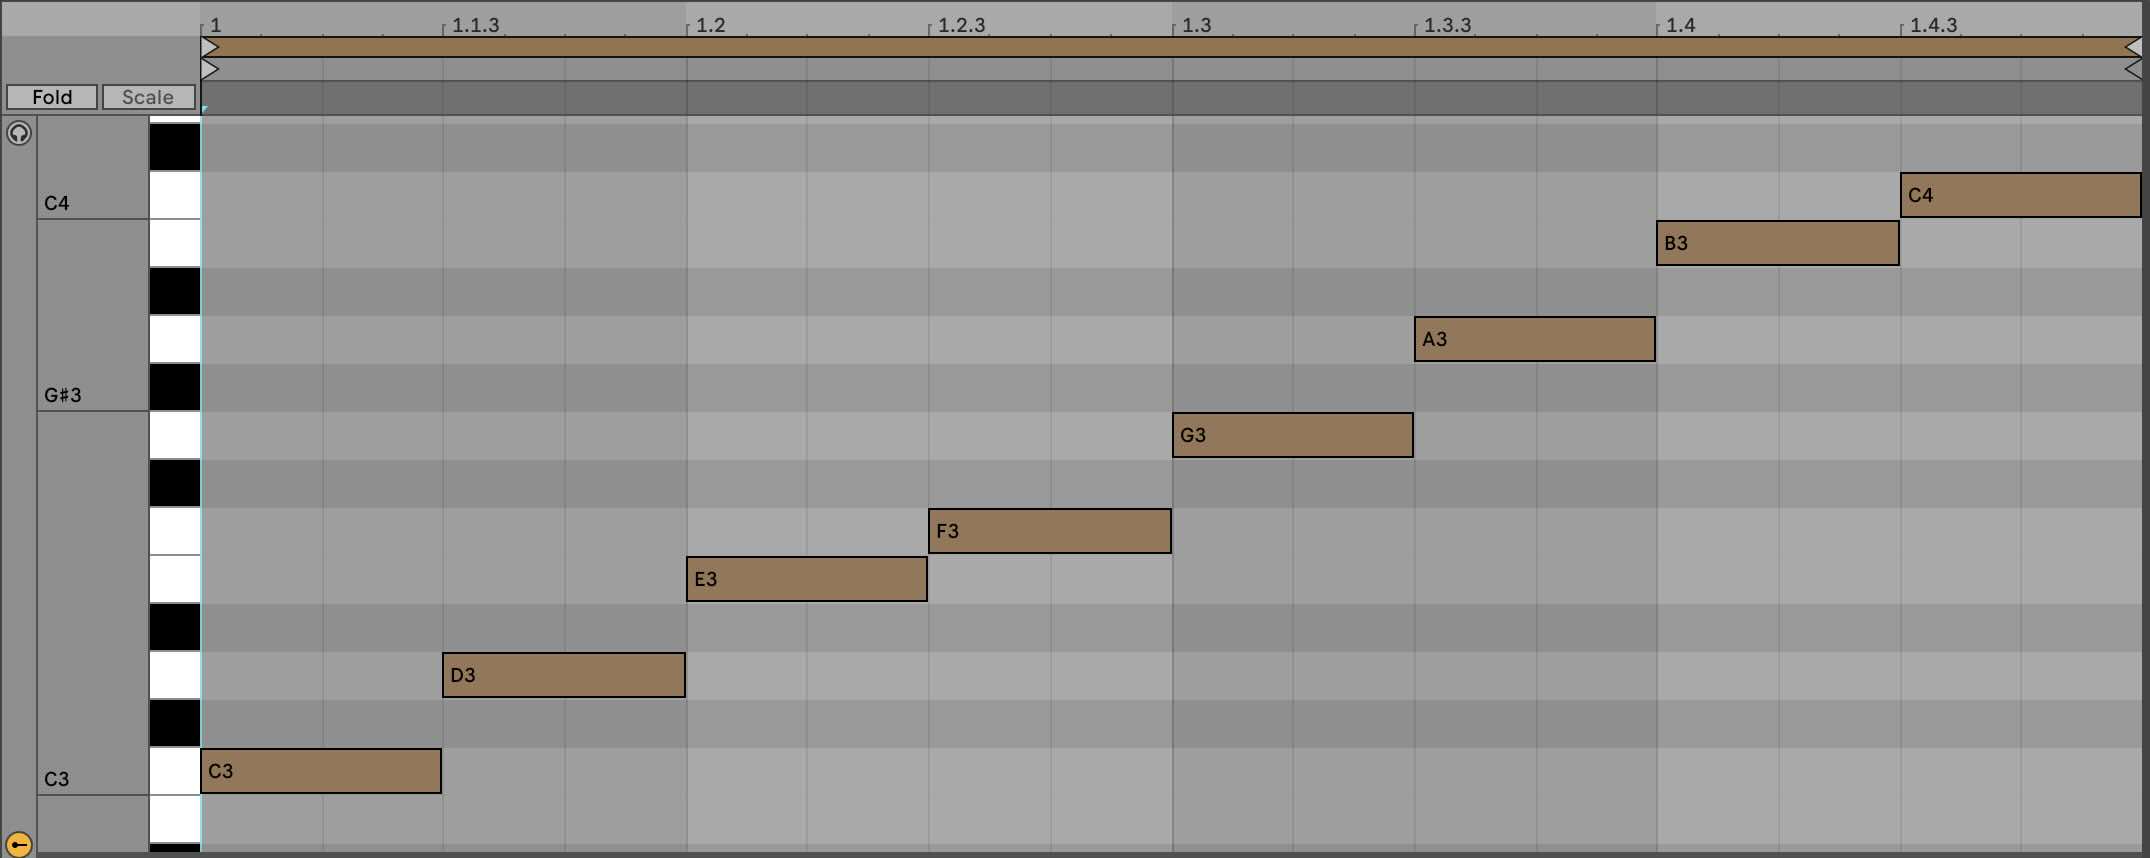 A MIDI sequence in a DAW